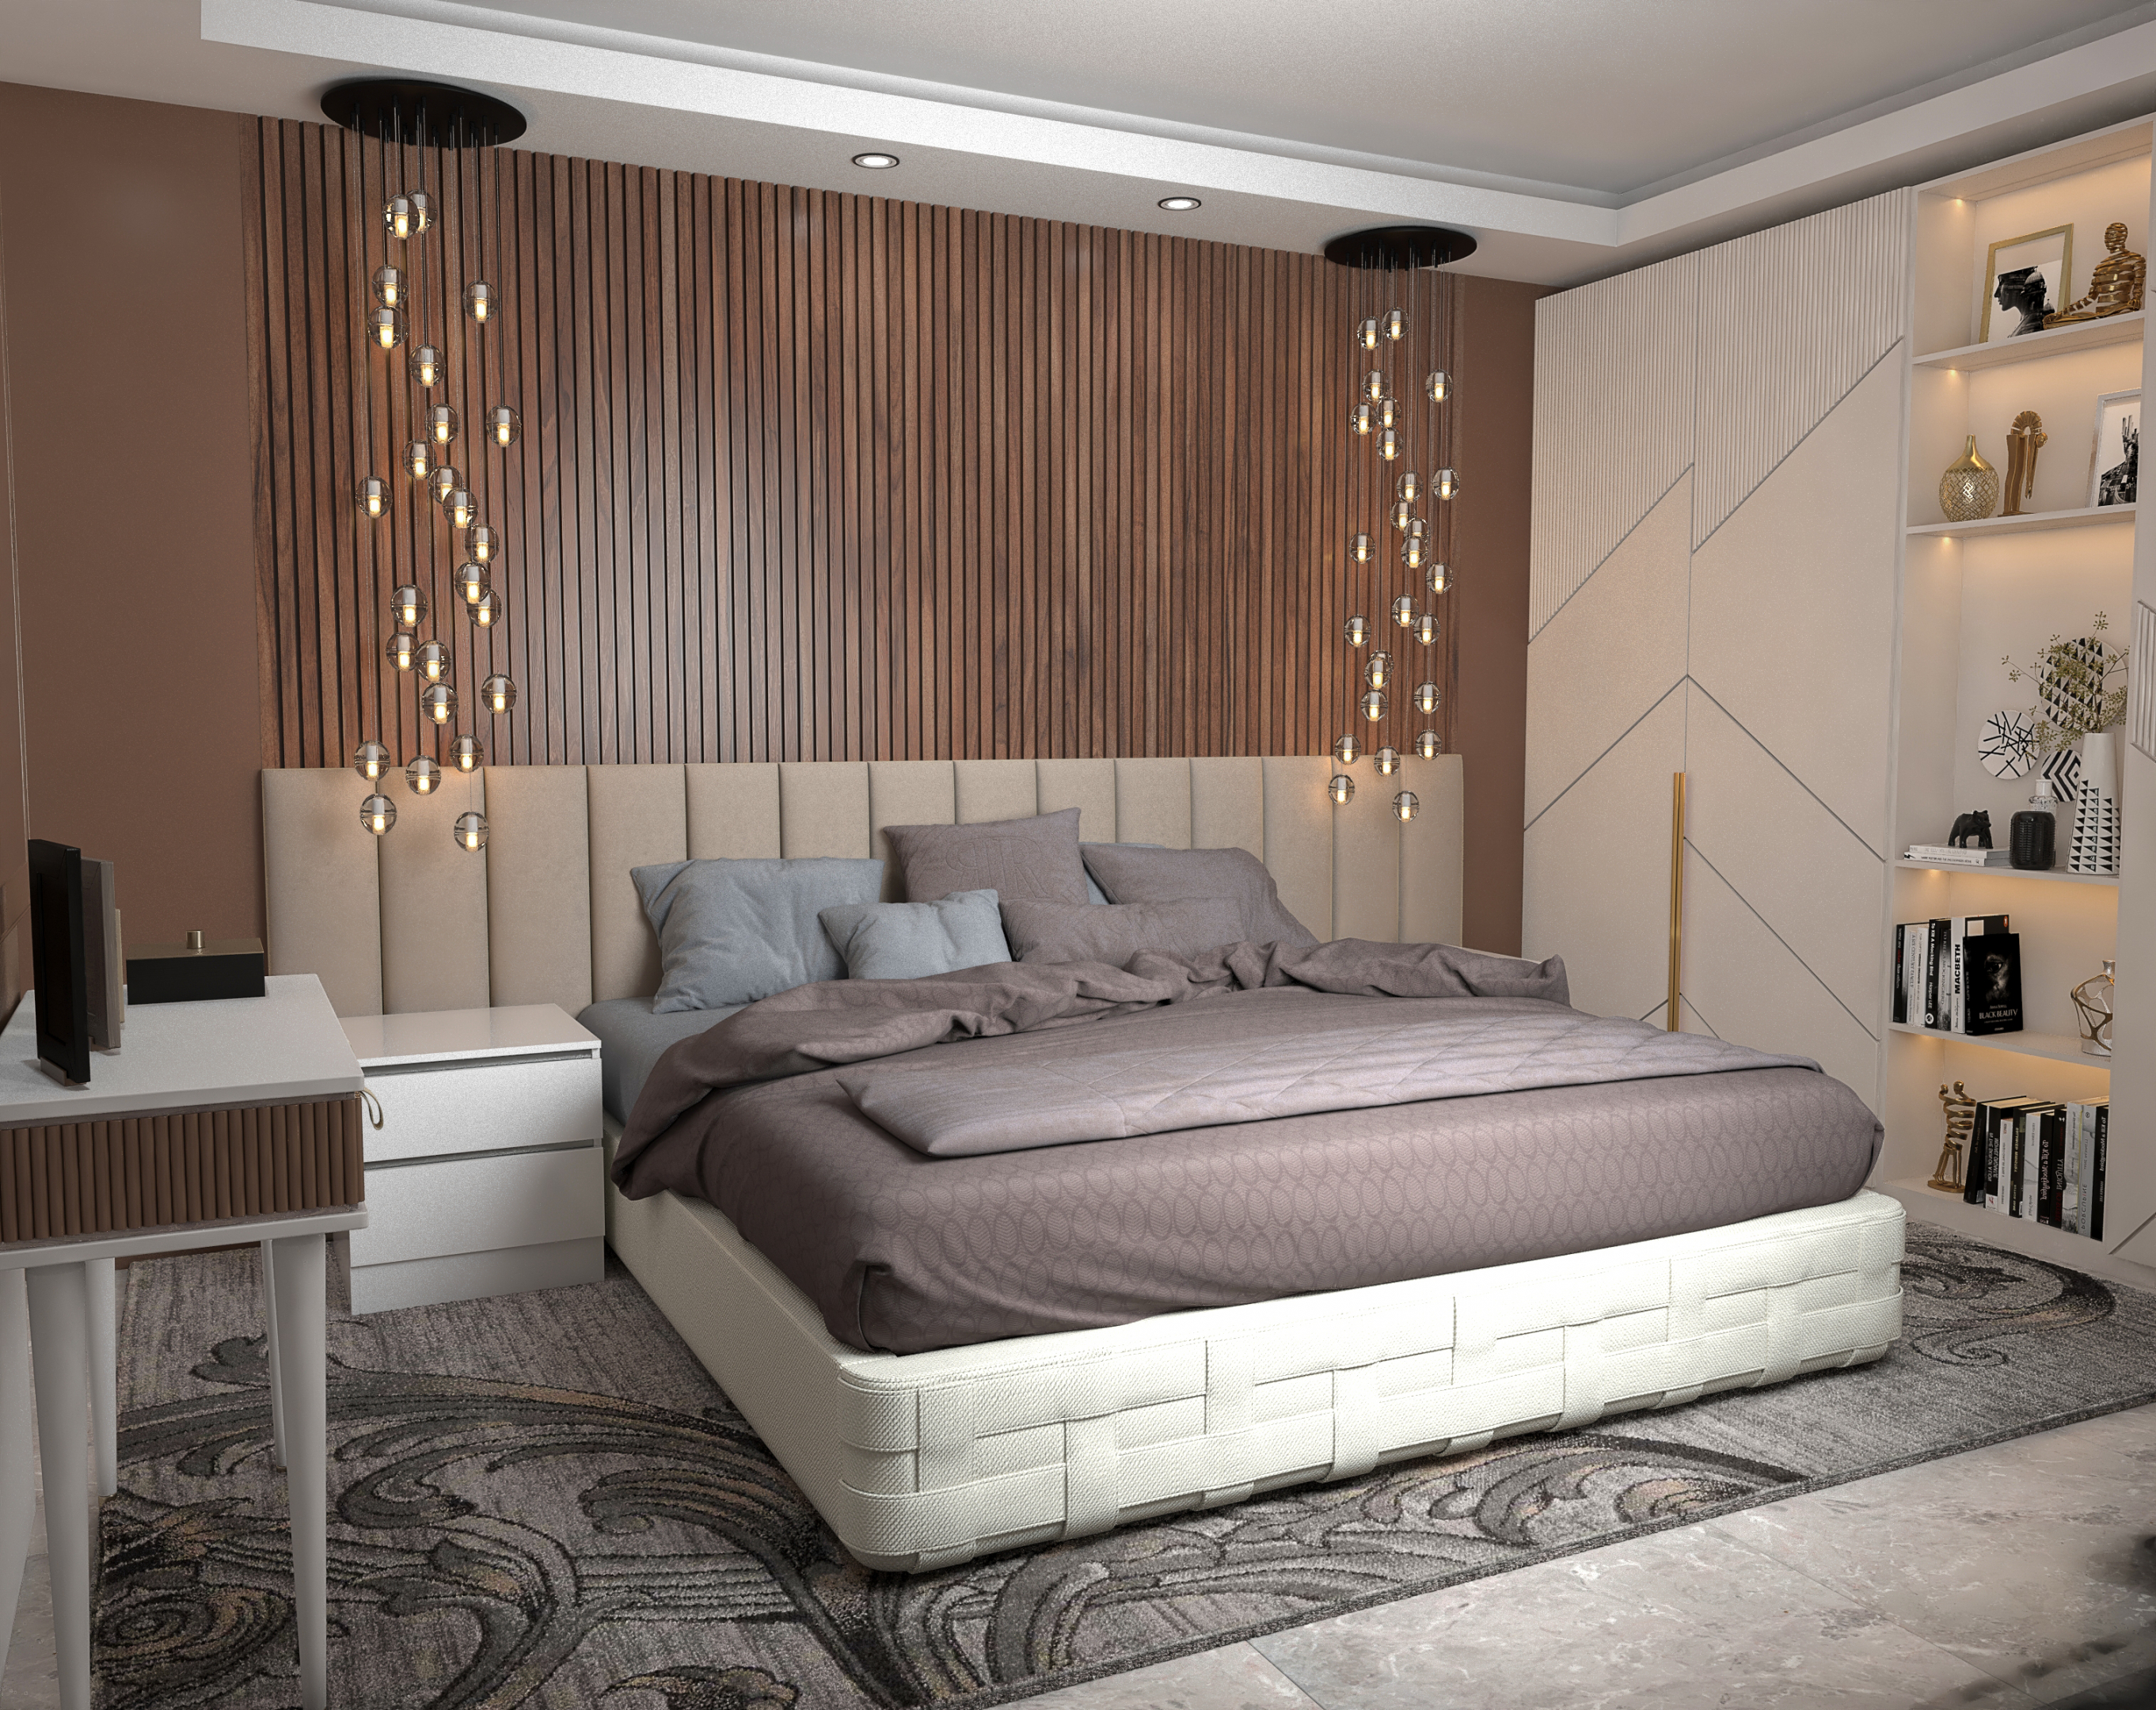 luxury bedroom in 3d max vray 5.0 image